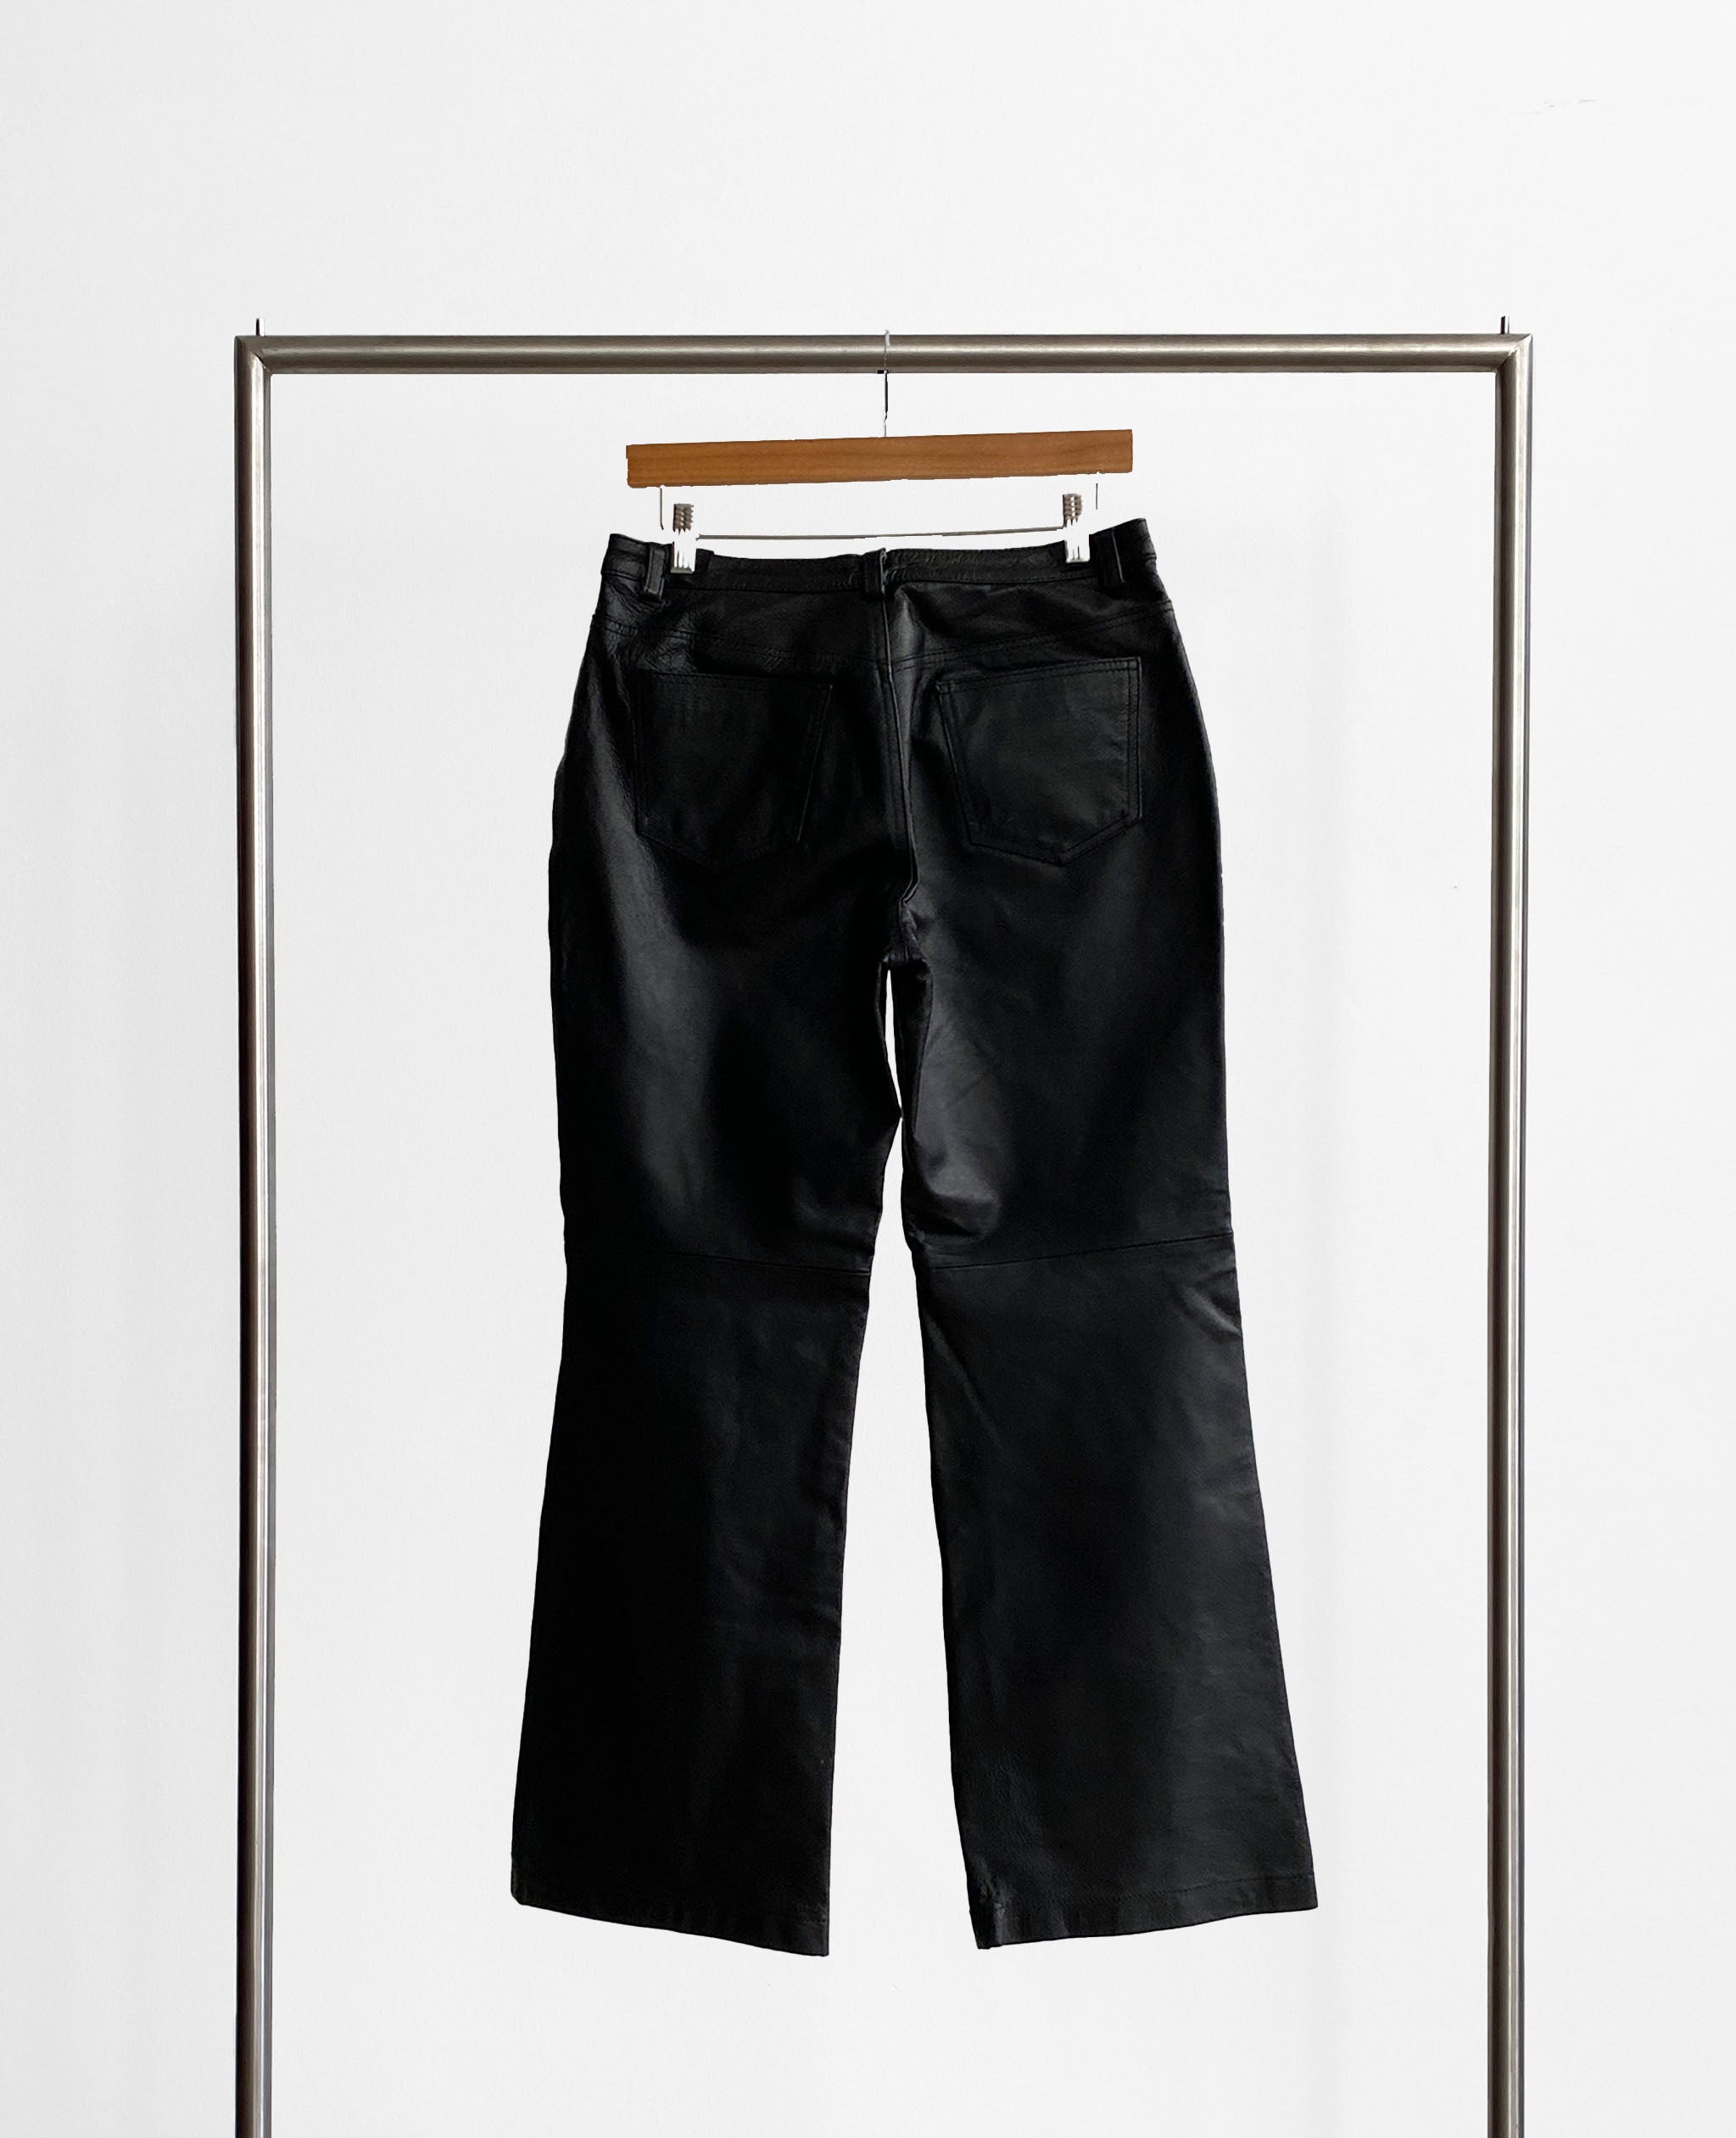 Black Leather Pant